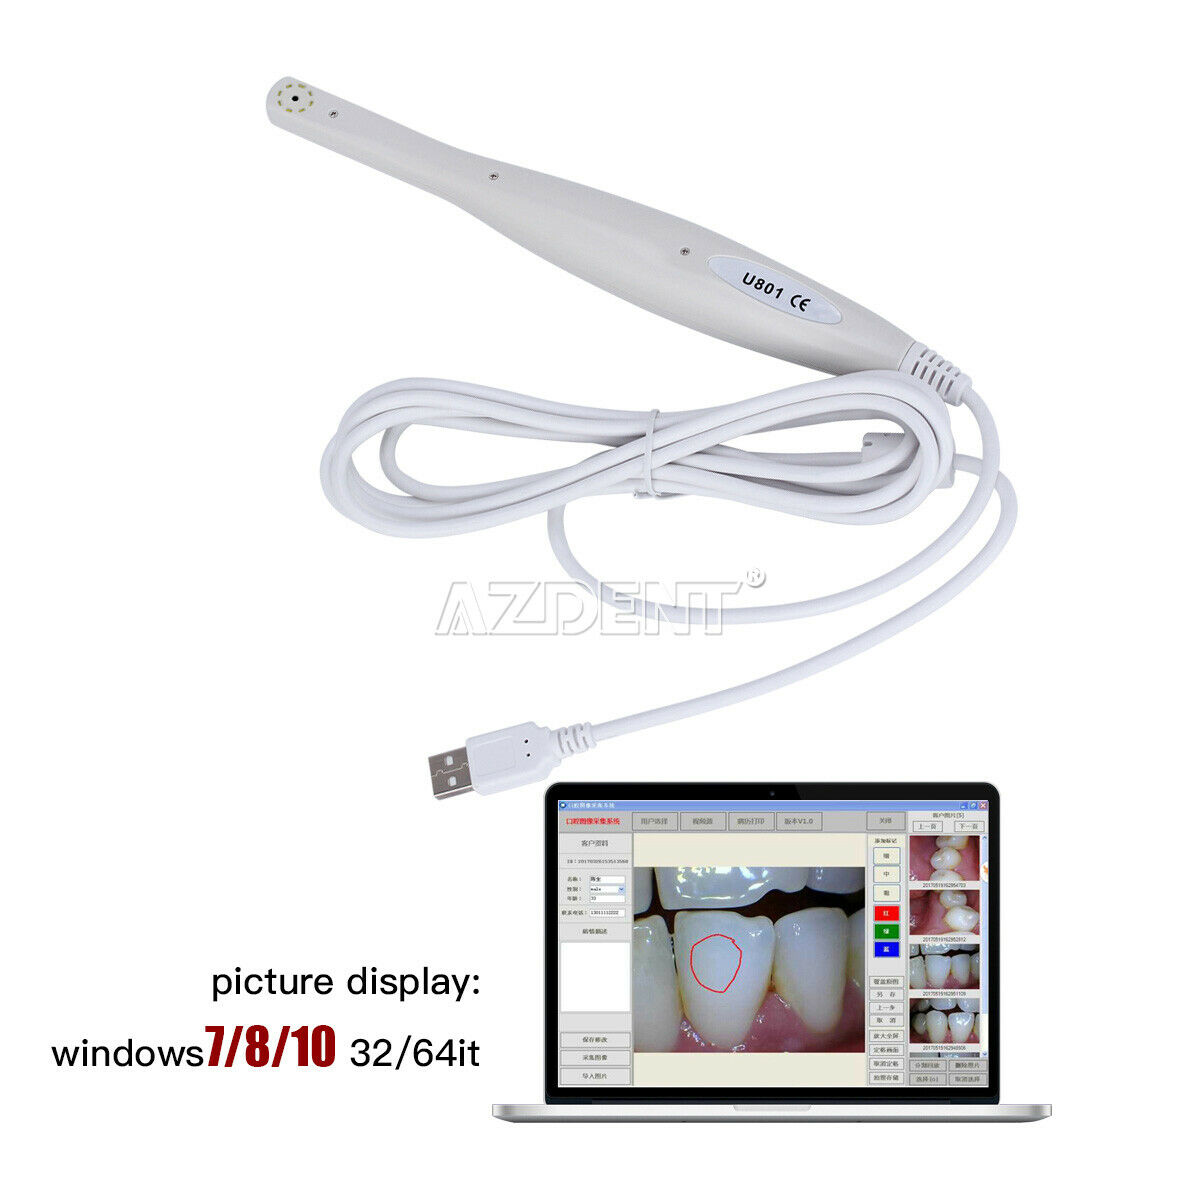 Professional USB Dental 6 LED Intraoral Camera work with 64 bit windows 7/8/10